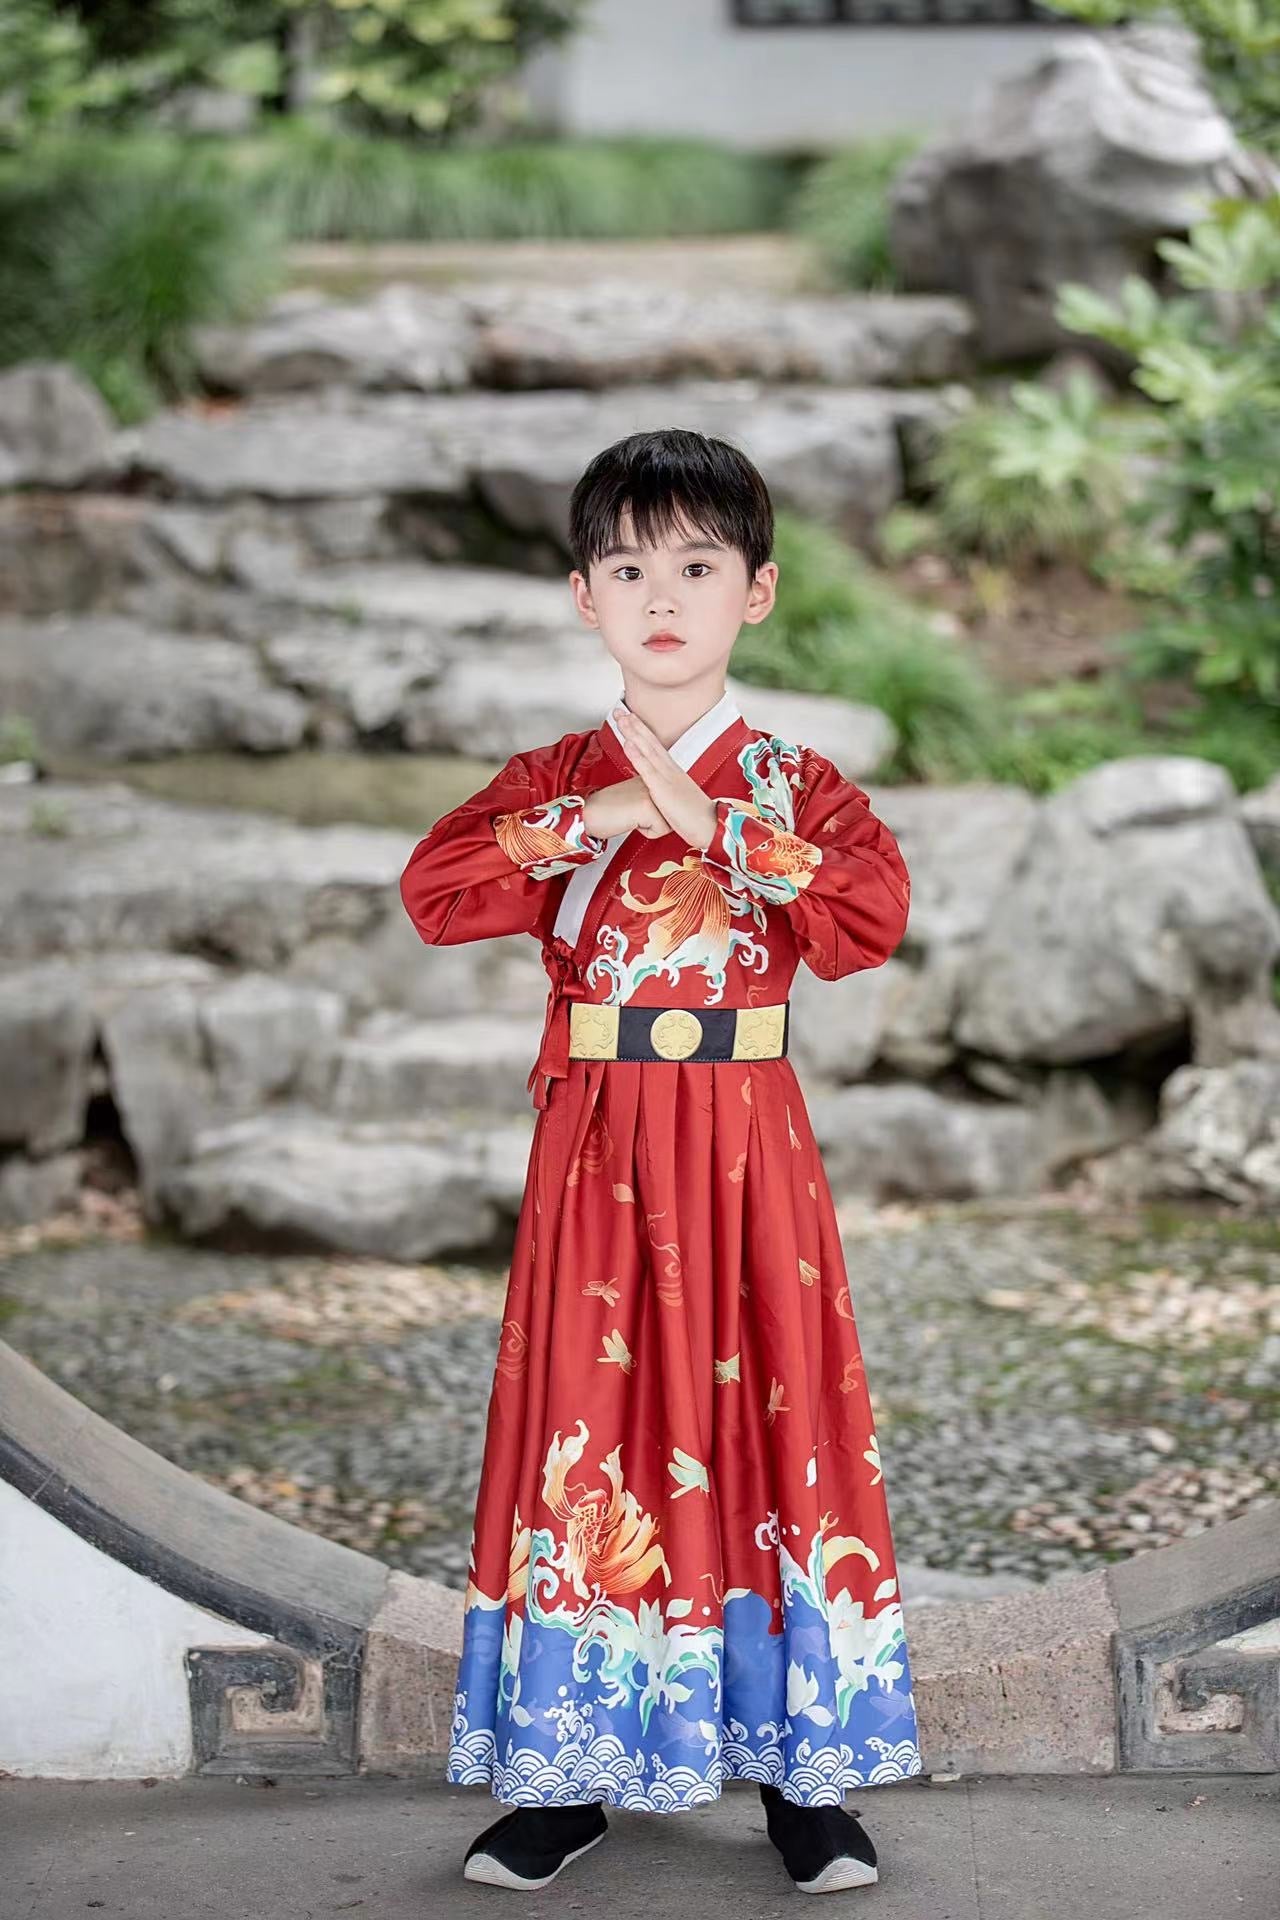 Lunar Fish Elegance: Vibrant Red Hanfu for Kids - Tang Dynasty Scholar Attire for Cultural Studies